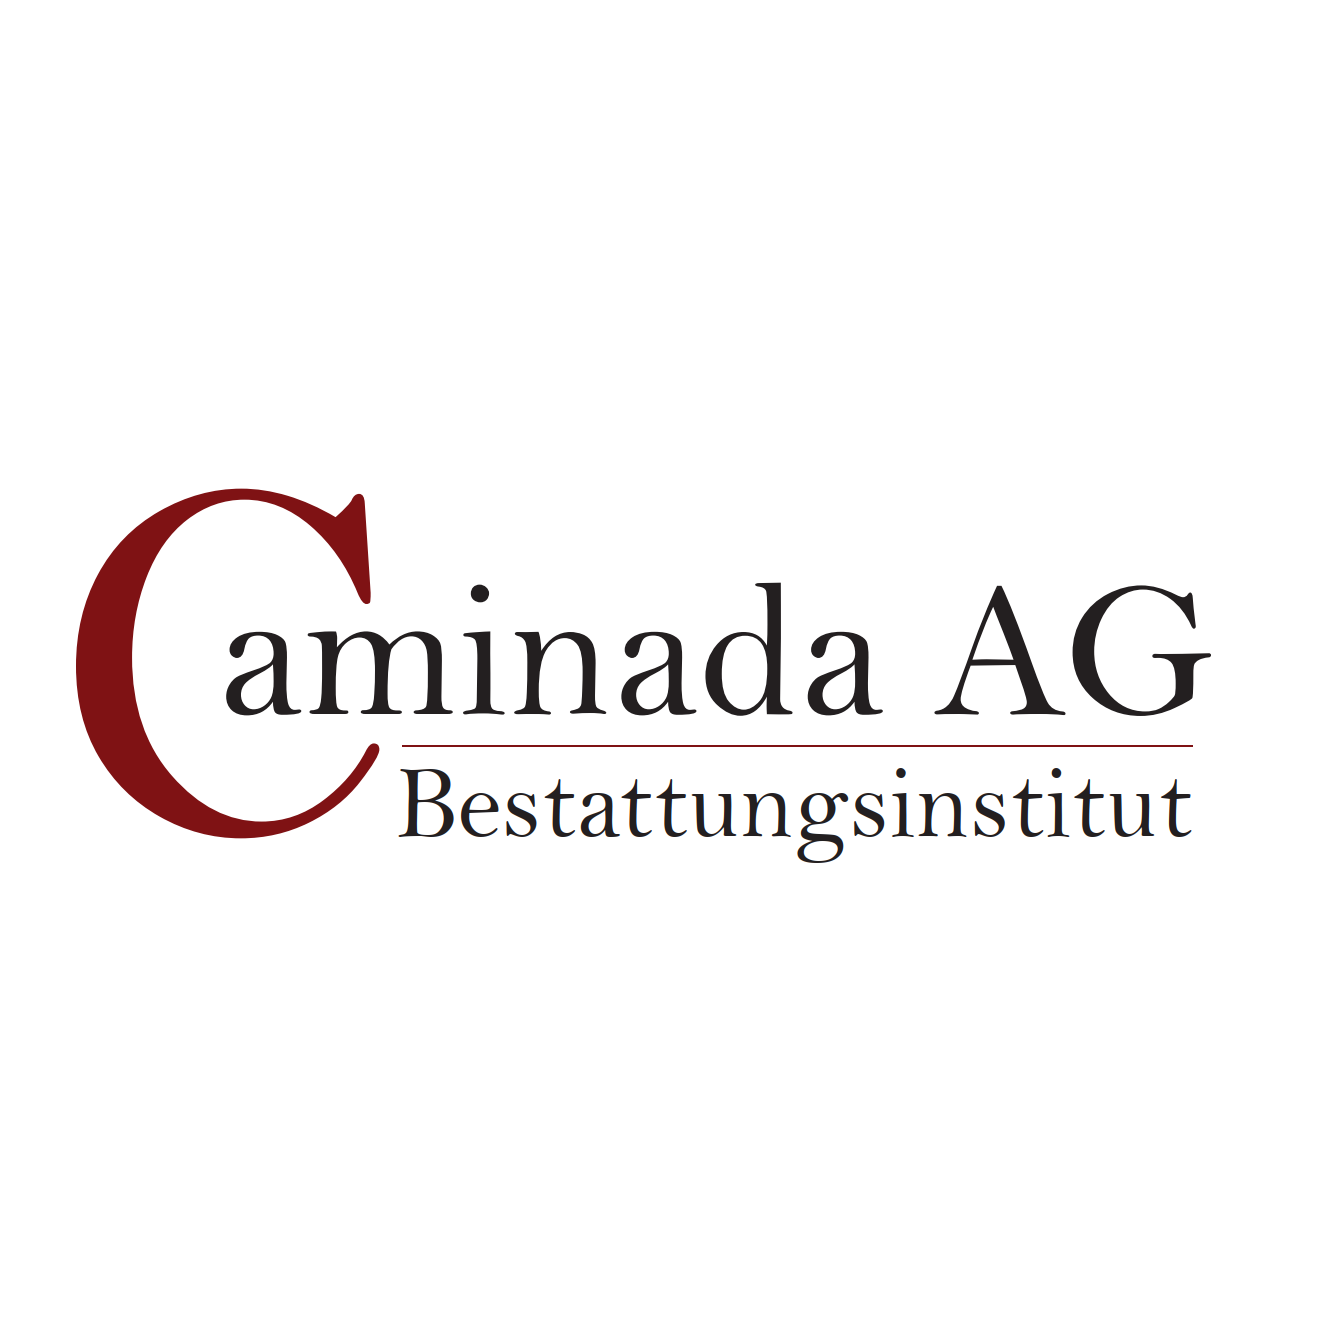 Bestattungsinstitut Caminada AG Logo